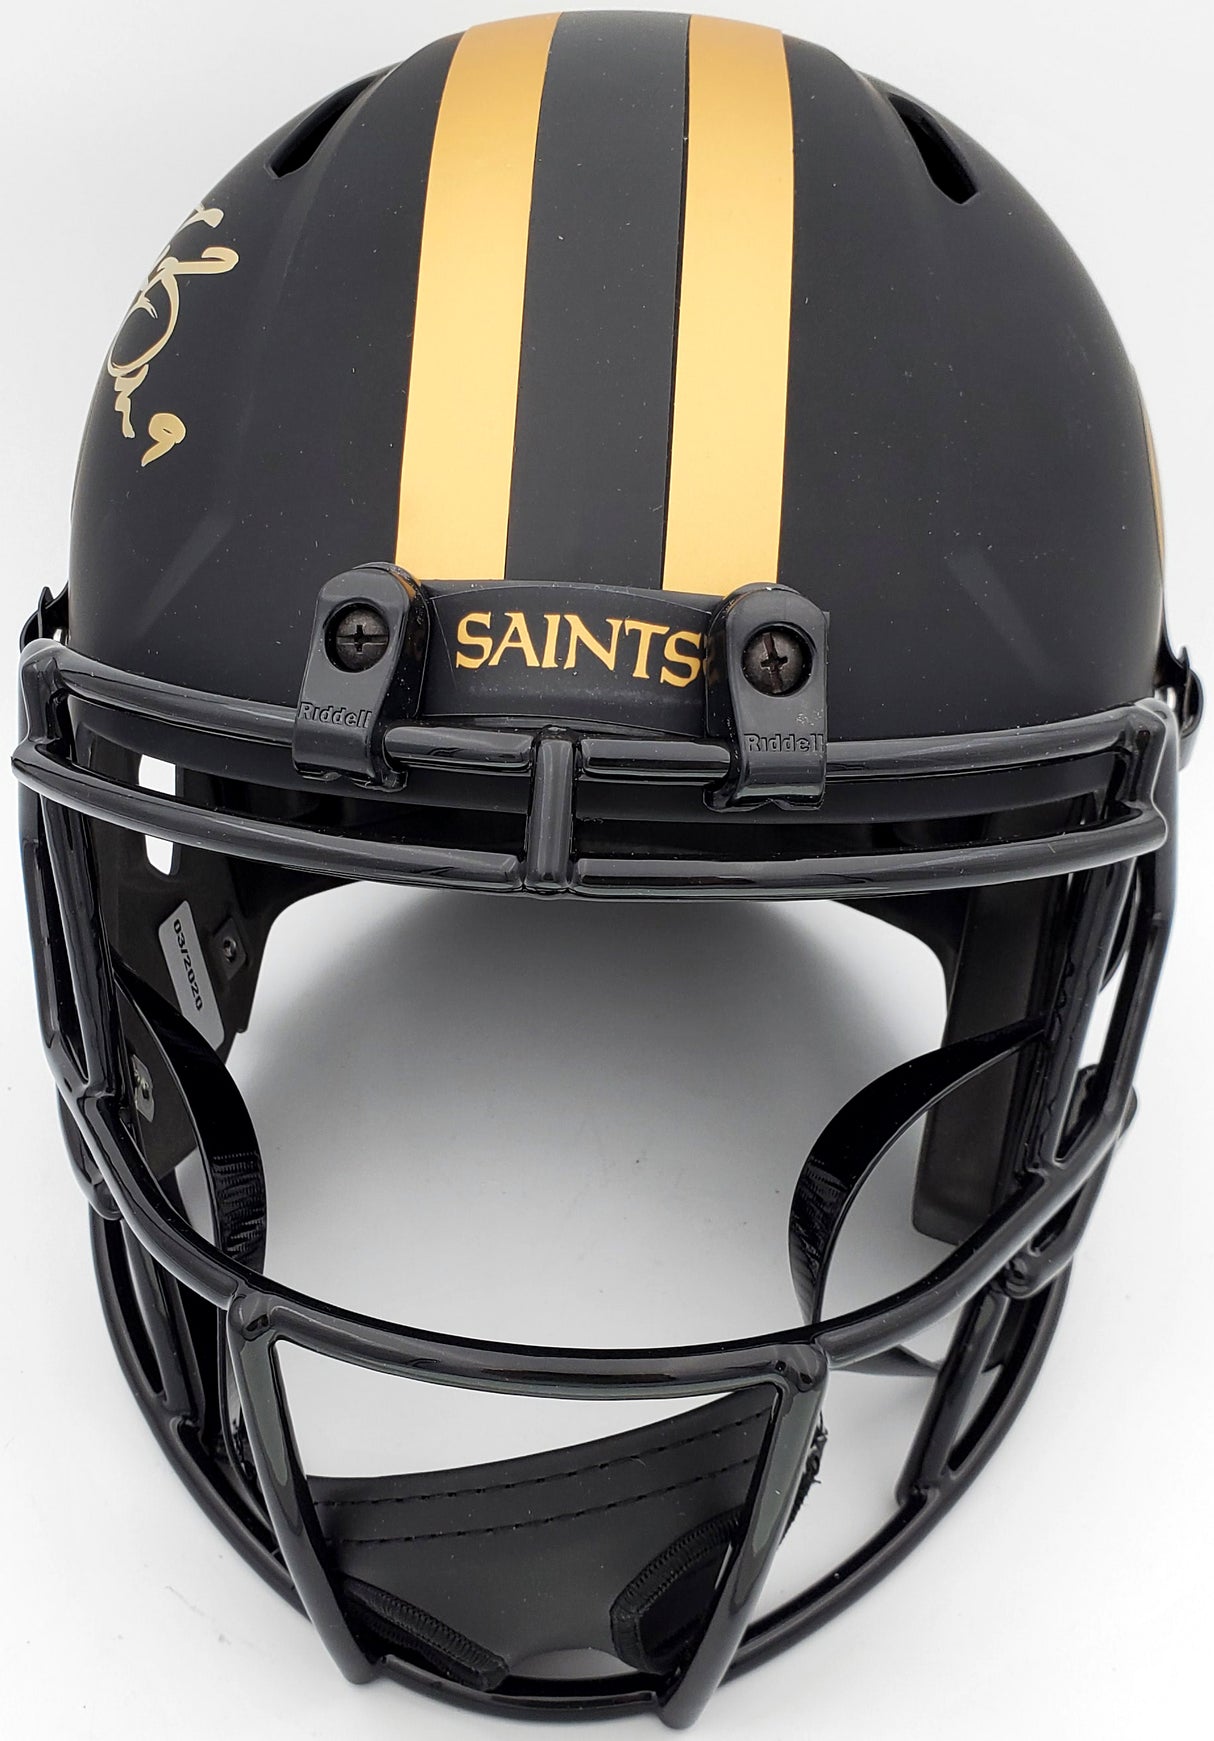 Drew Brees Autographed New Orleans Saints Black Eclipse Full Size Speed Replica Helmet Beckett BAS Stock #177123